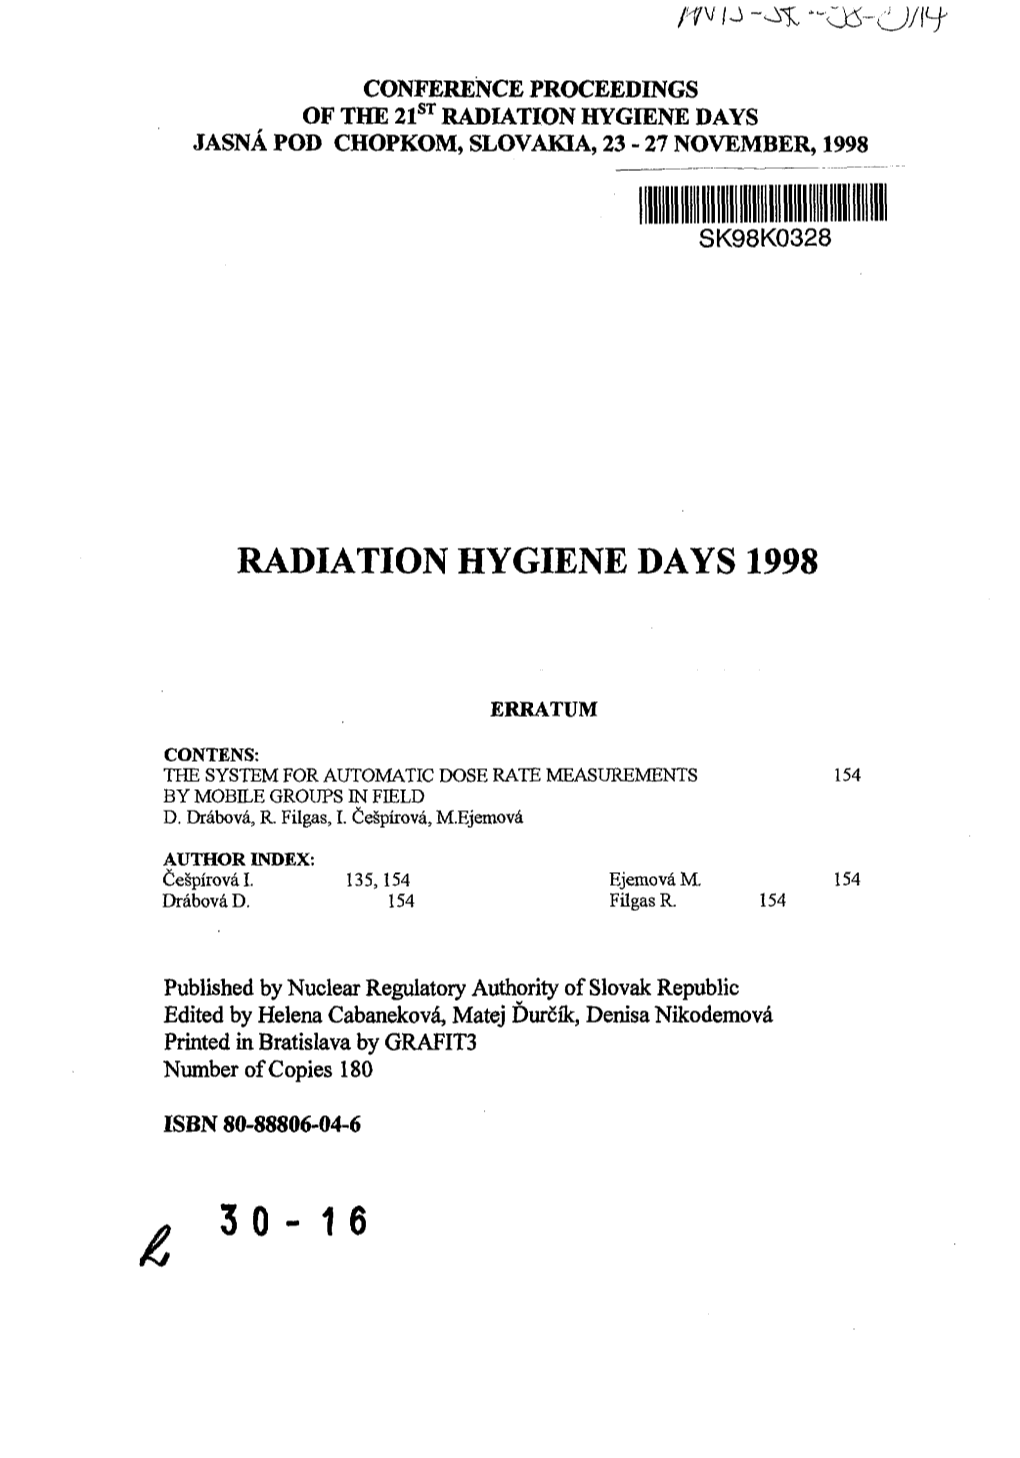 Radiation Hygiene Days 1998